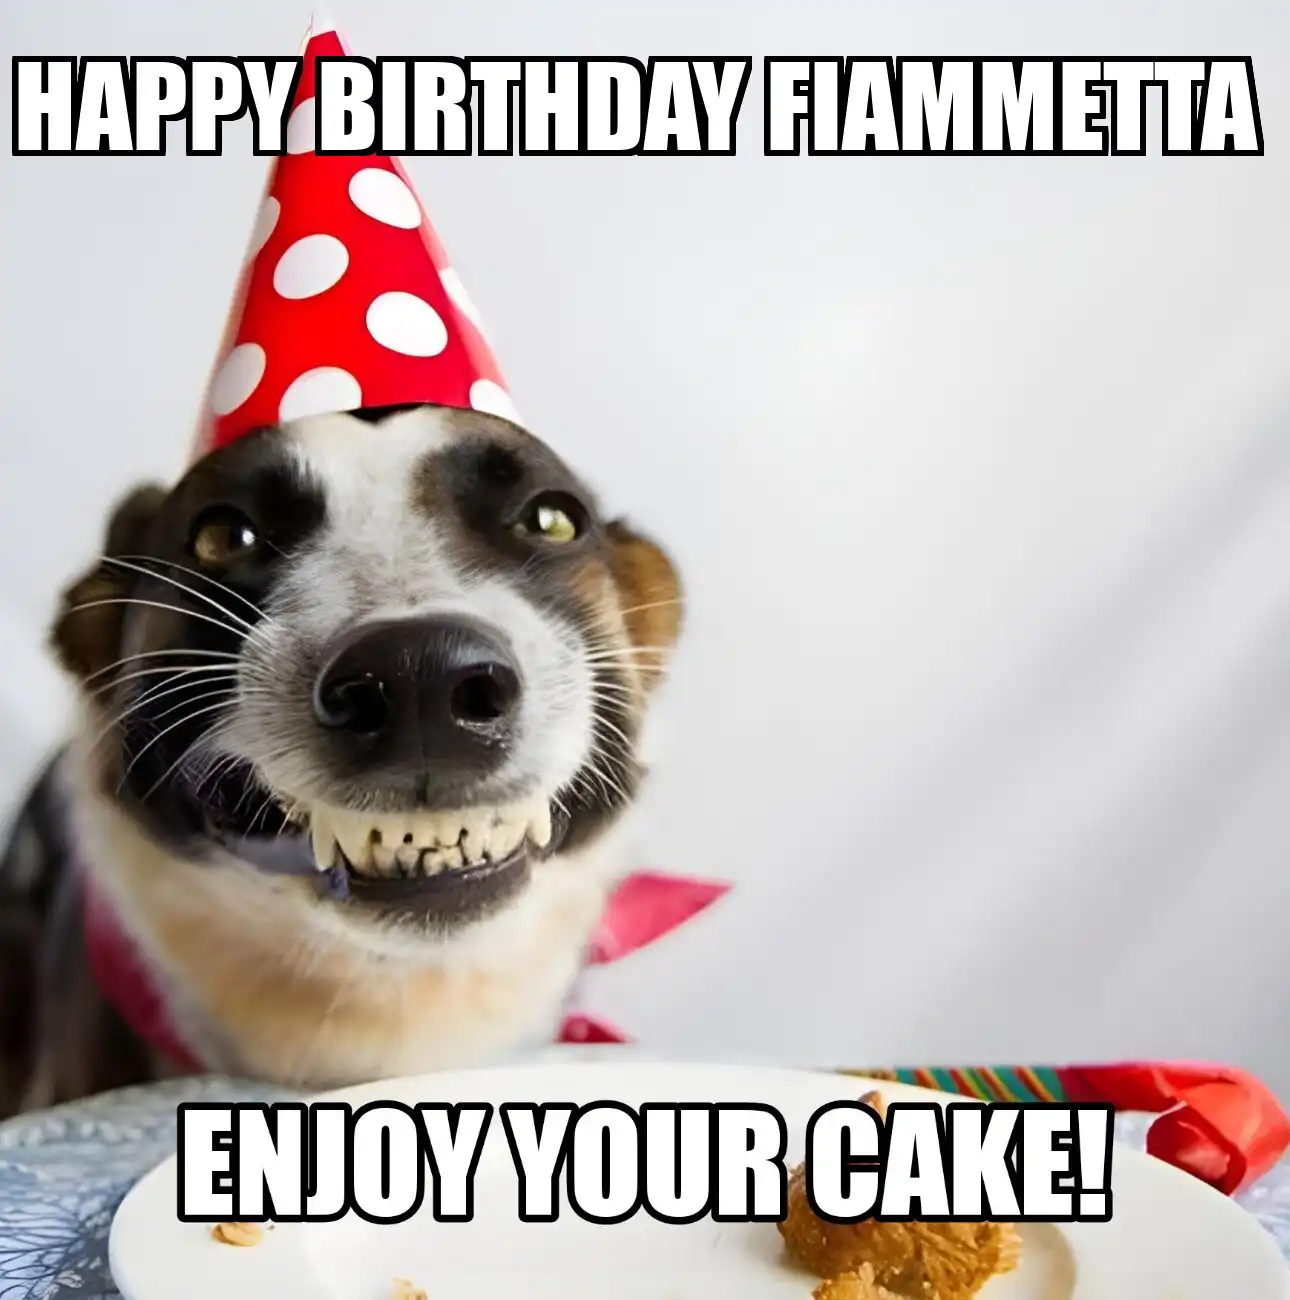 Happy Birthday Fiammetta Enjoy Your Cake Dog Meme